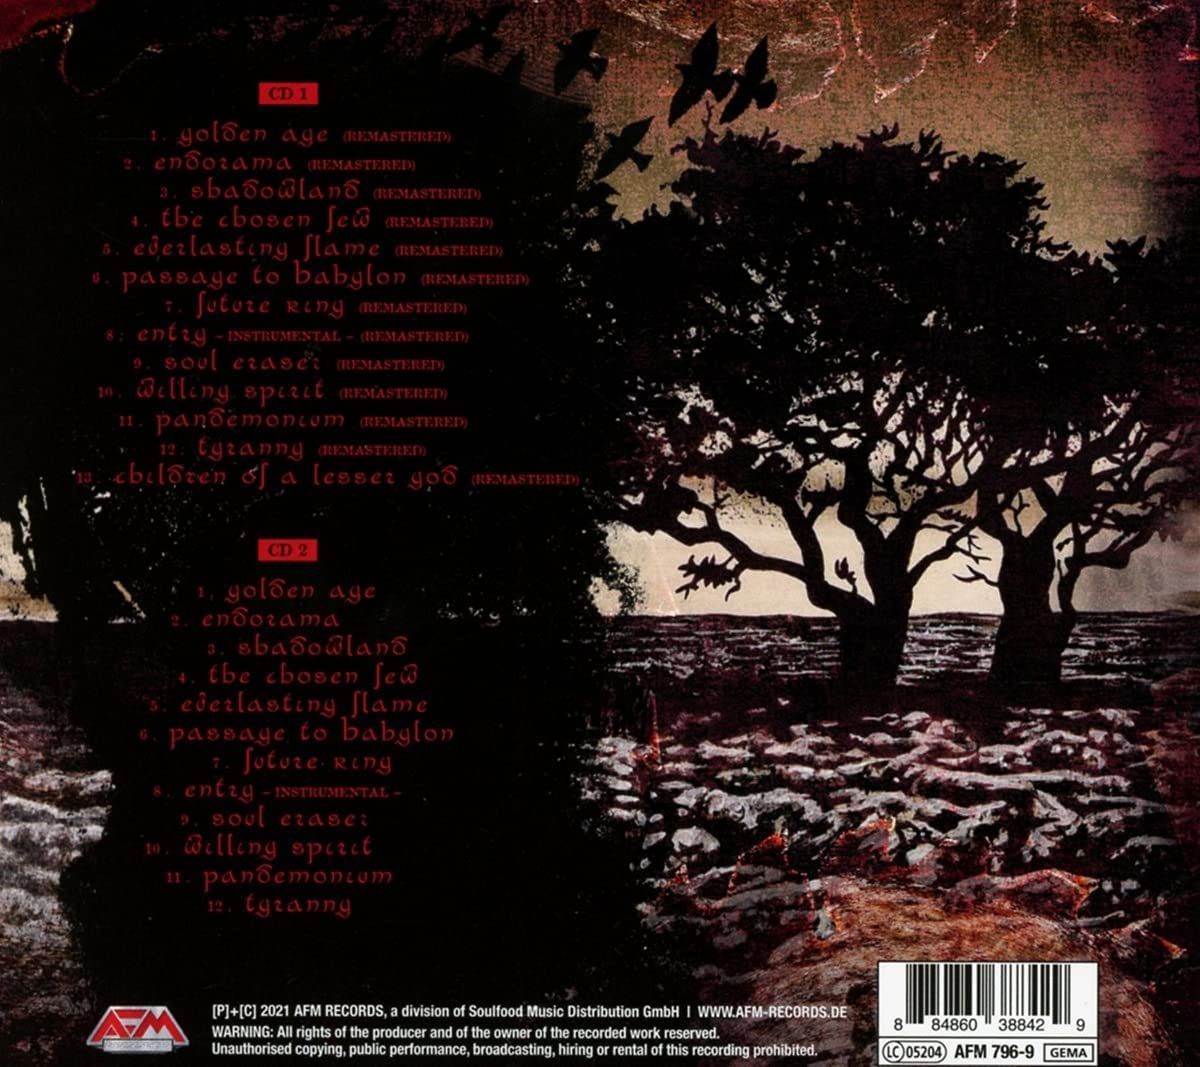 Kreator - Endorama (2022 Ultimate Ed. 2CD remastered reissue) - CD - New